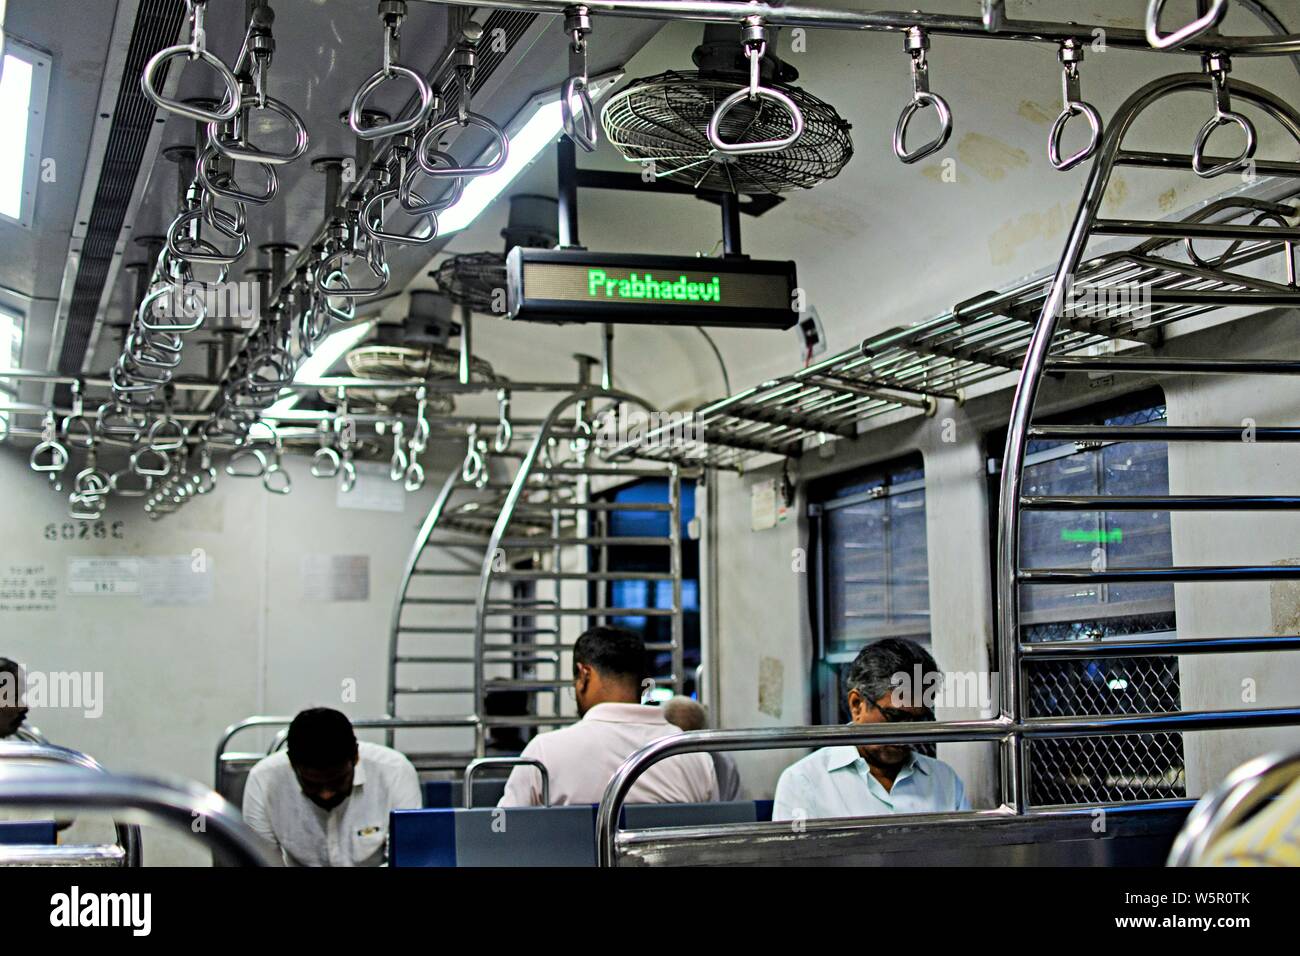 Anzeige im Zug Prabhadevi Bahnhof Mumbai Maharashtra Indien Asien Stockfoto